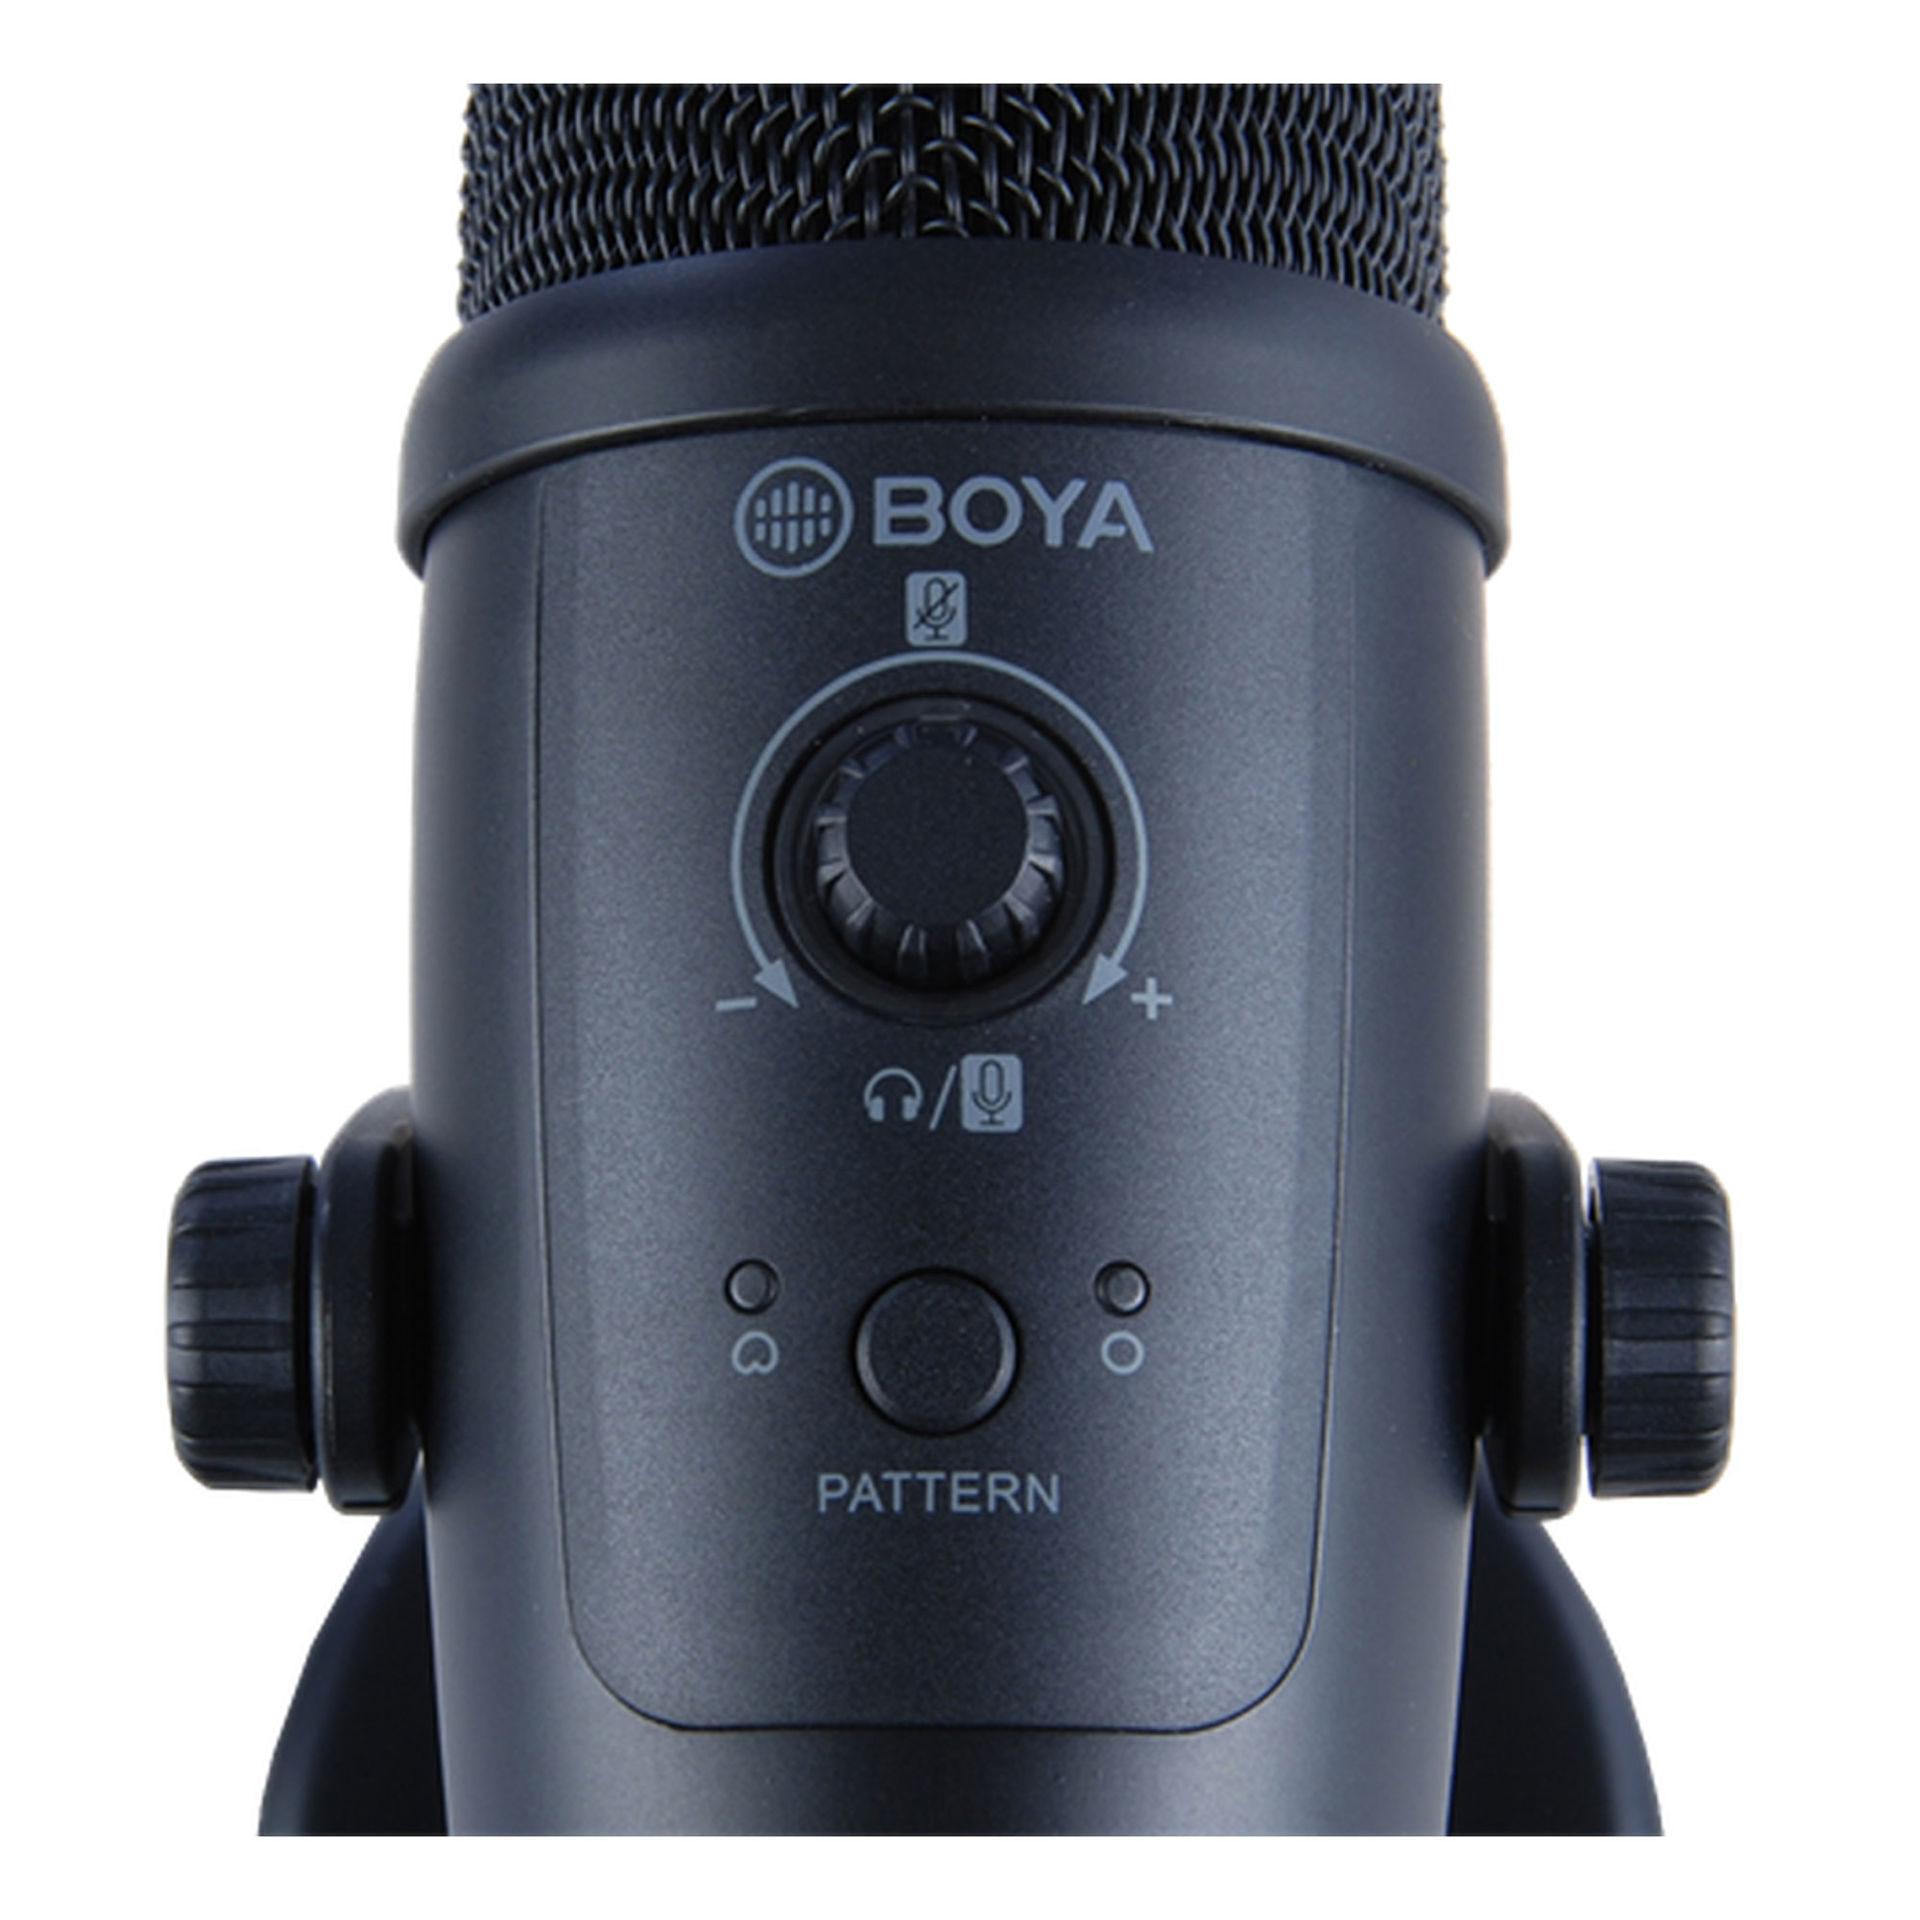 میکروفون استودیویی بویا مدل MICROPHONE BOYA PM-500